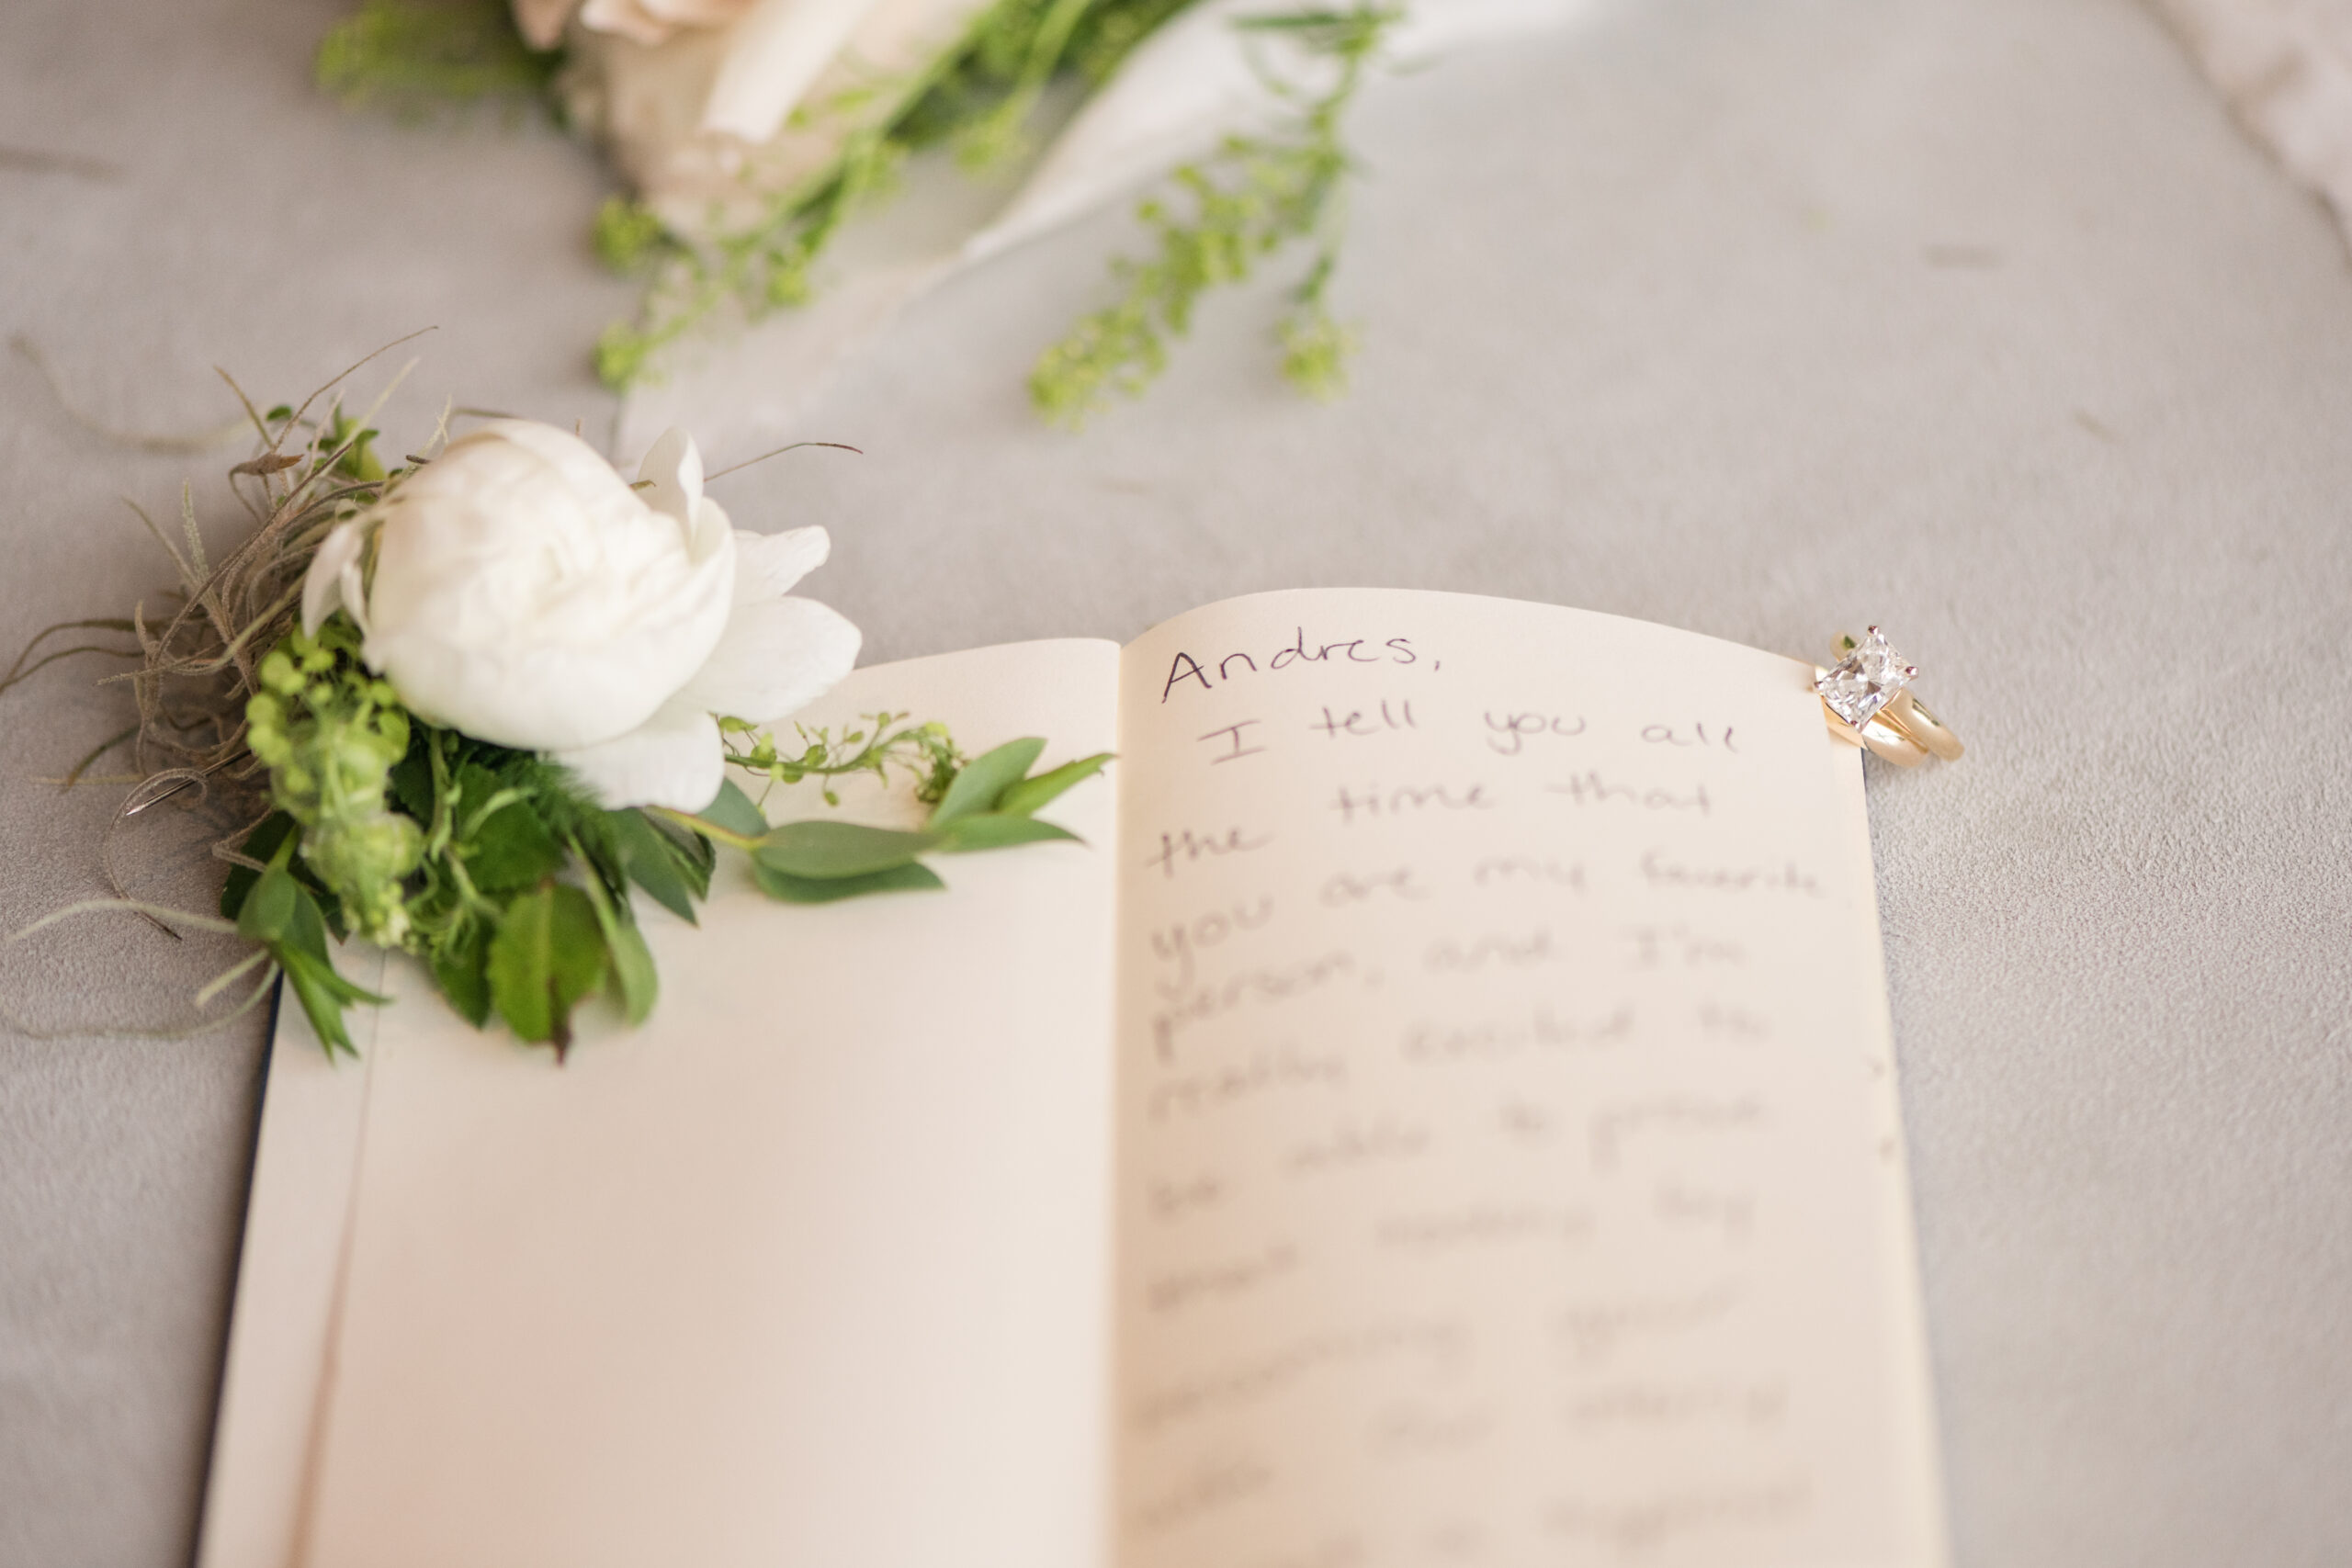 wedding vows in a book